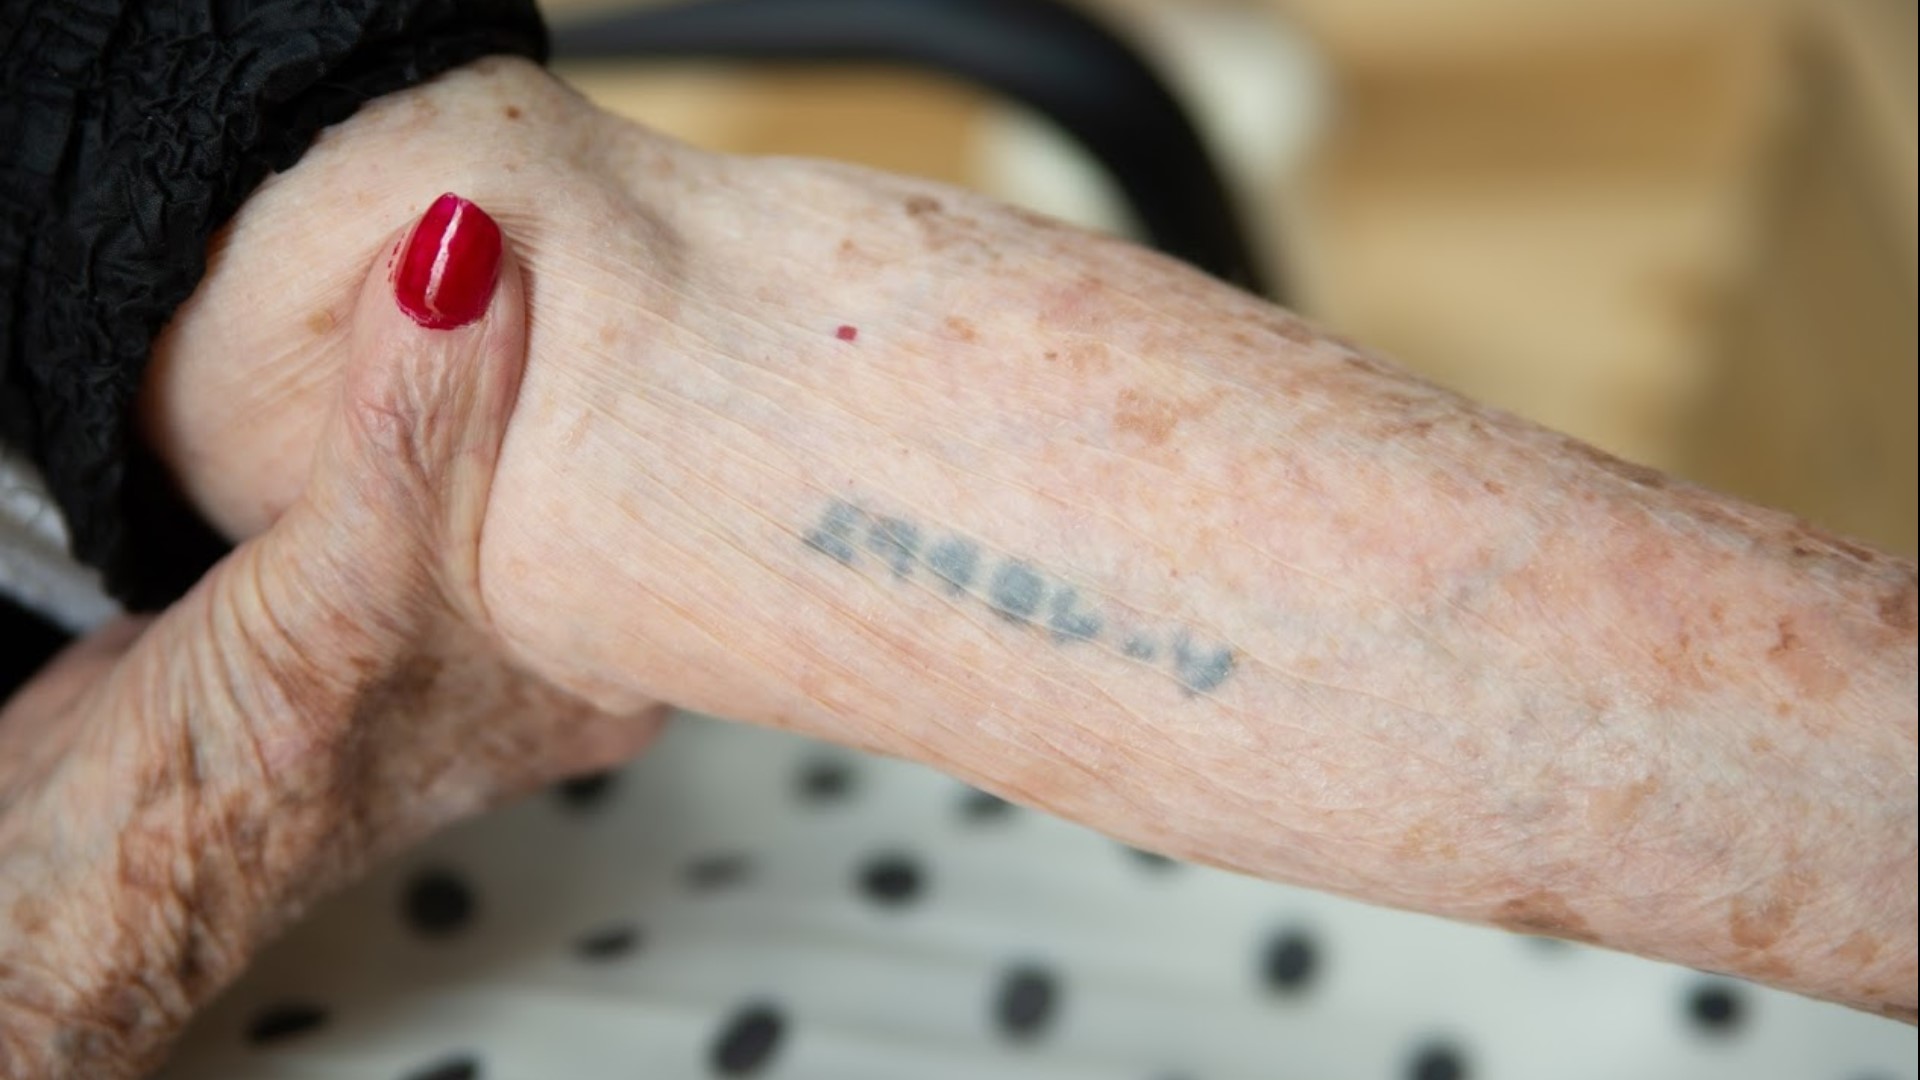 Holocaust survivor recalls the lie that saved her life 